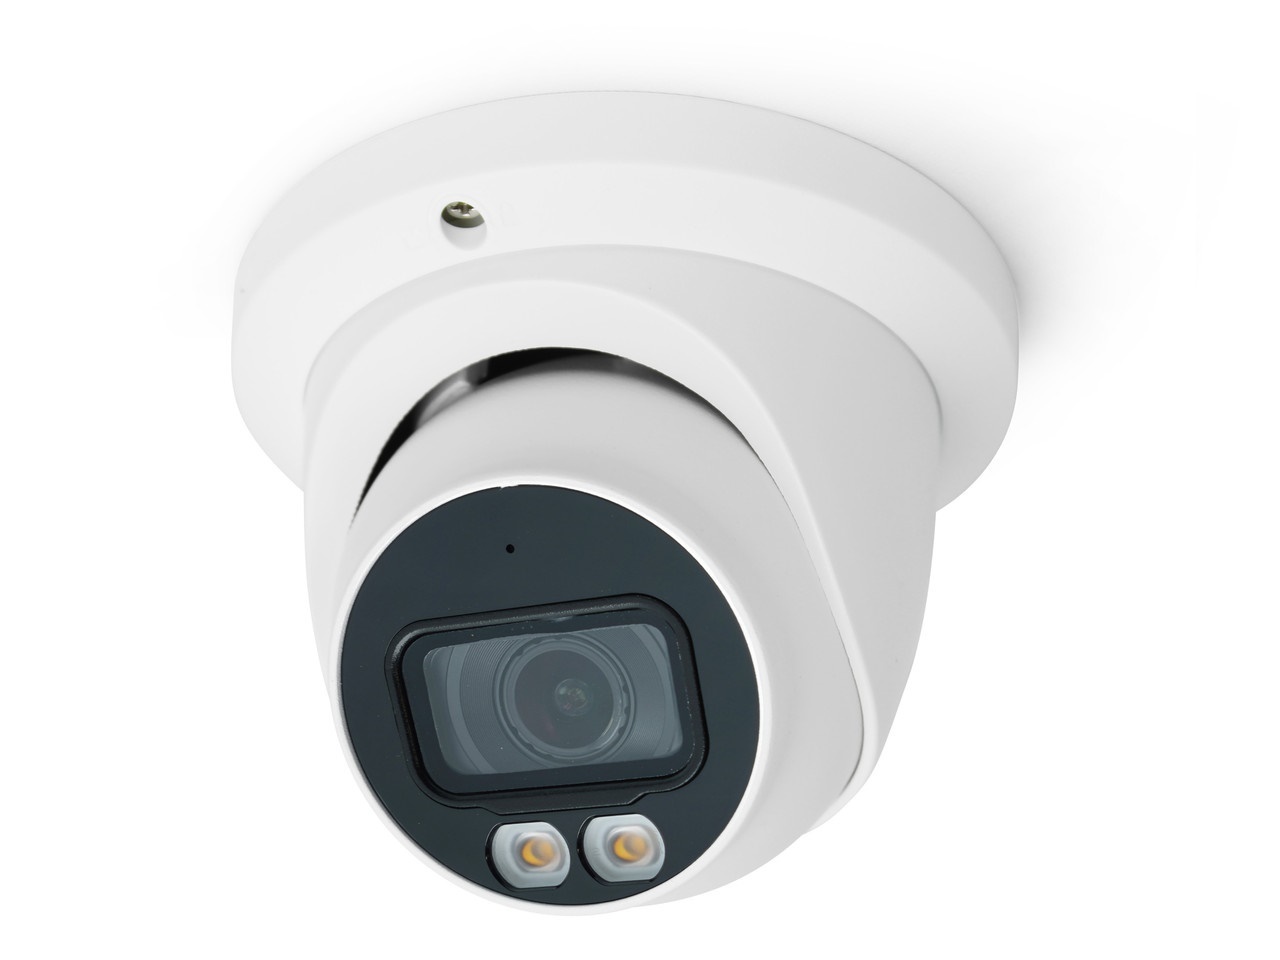 IPMX-E40F-W1-LED 4MP Full-Color LED AI Eyeball Network Camera by ICRealtime